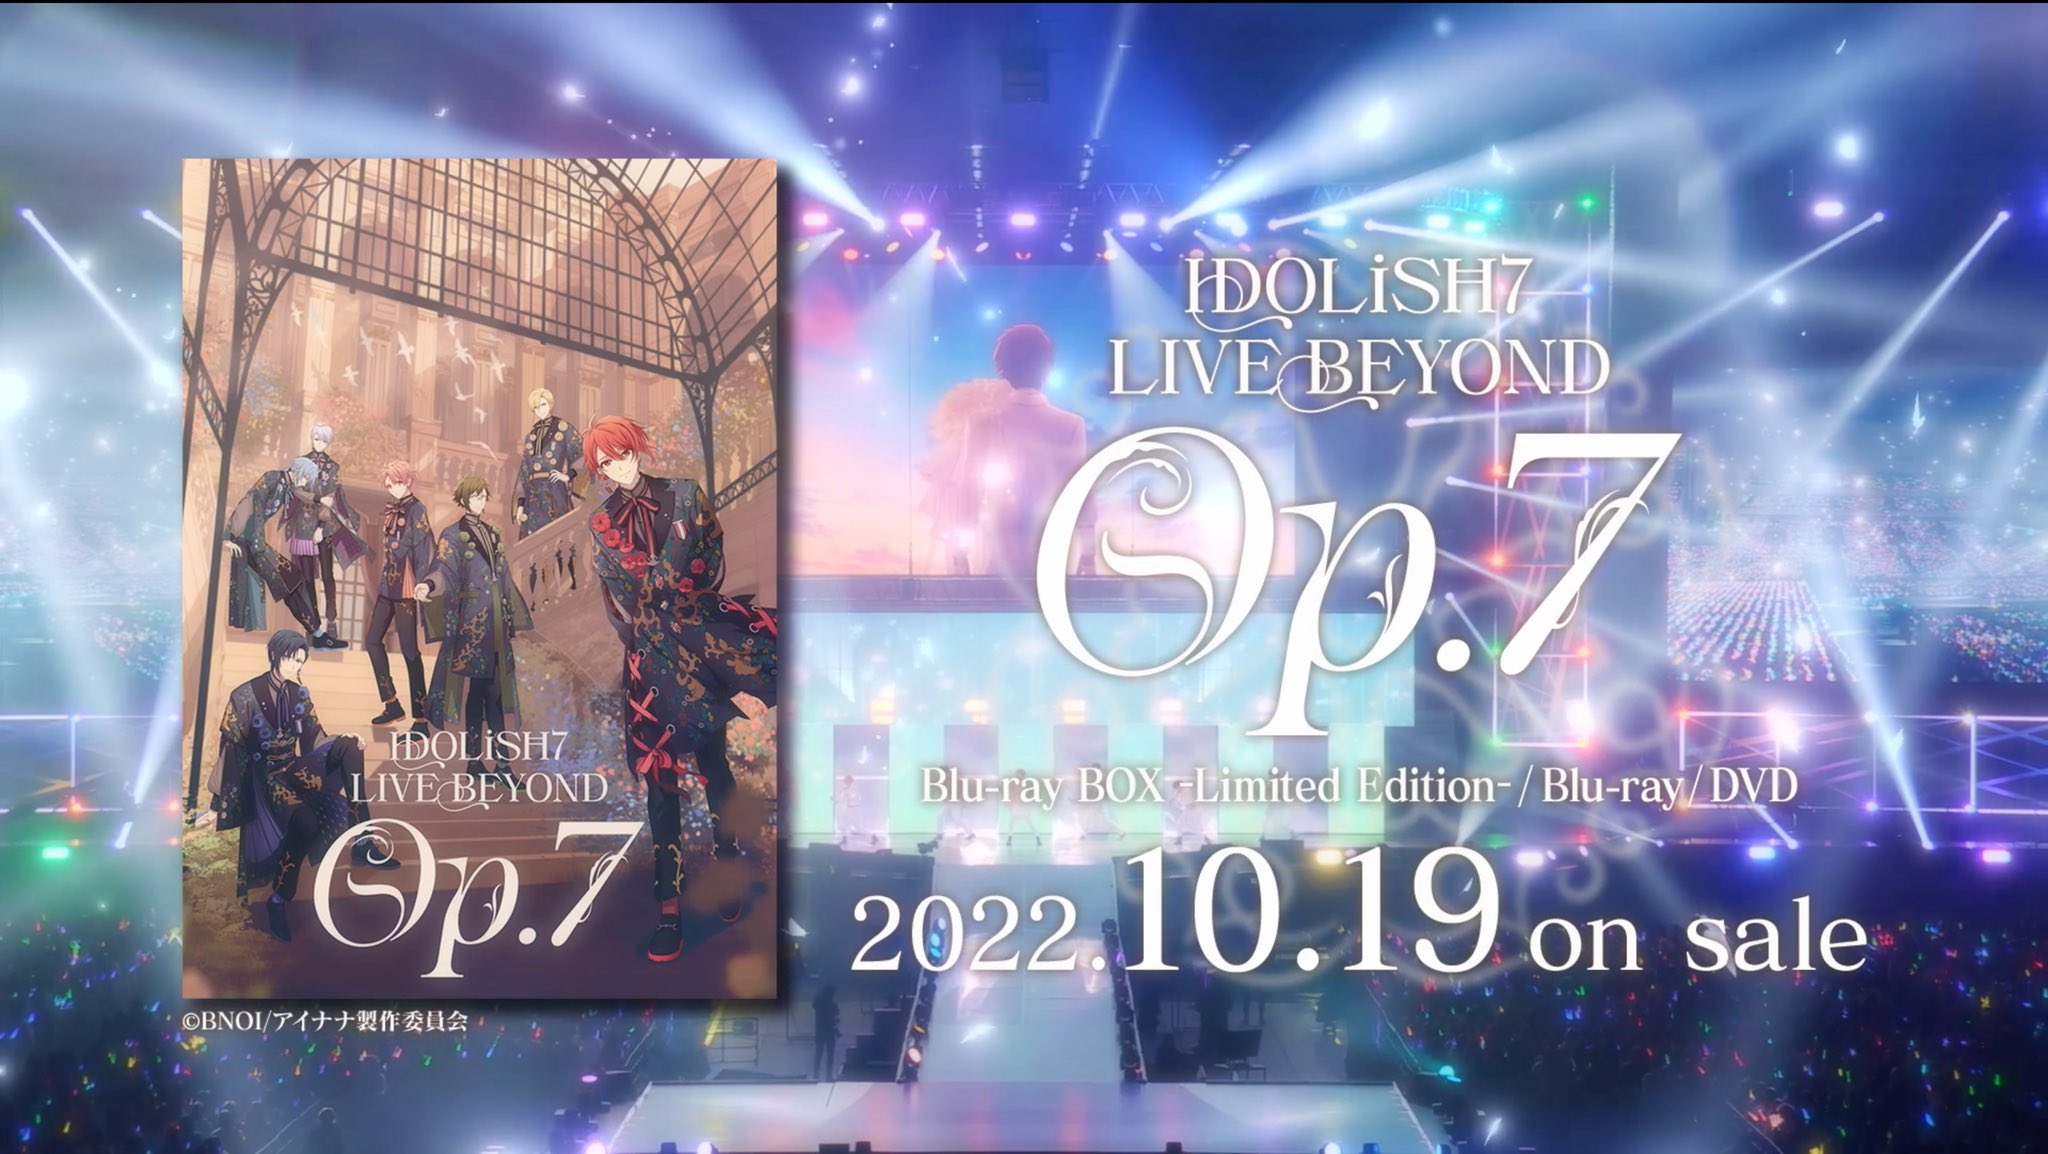 IDOLiSH7 LIVE BEYOND Op.7 Blu-ray オプナナ